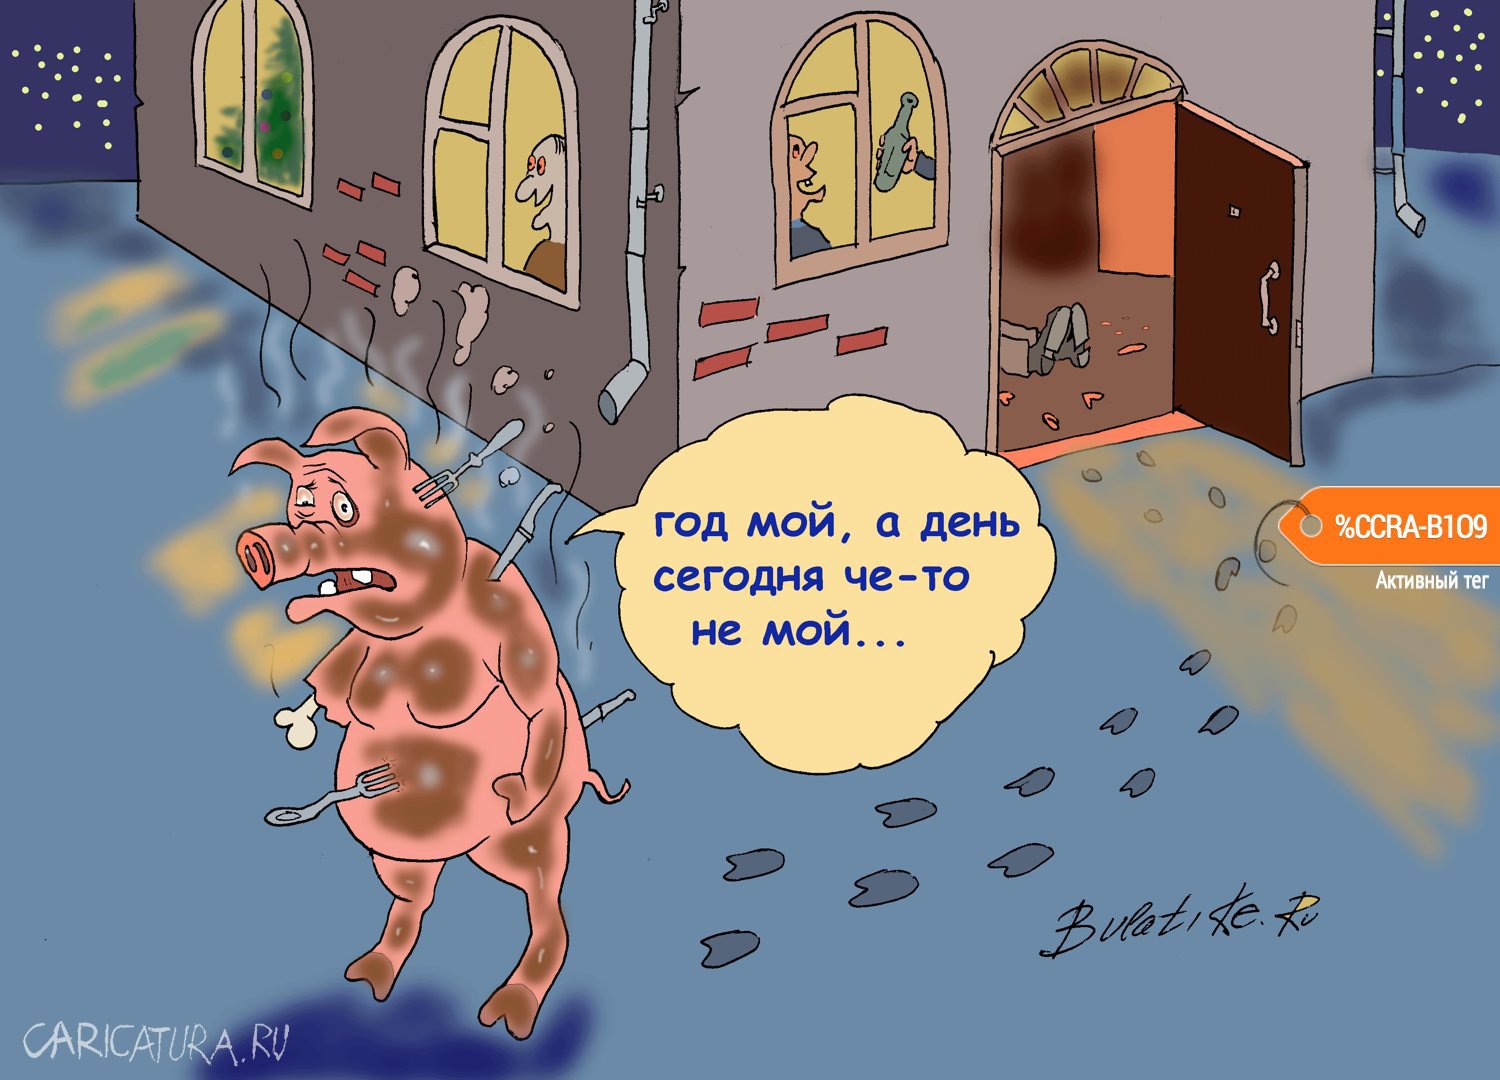 Карикатура "Год свиньи", Булат Ирсаев